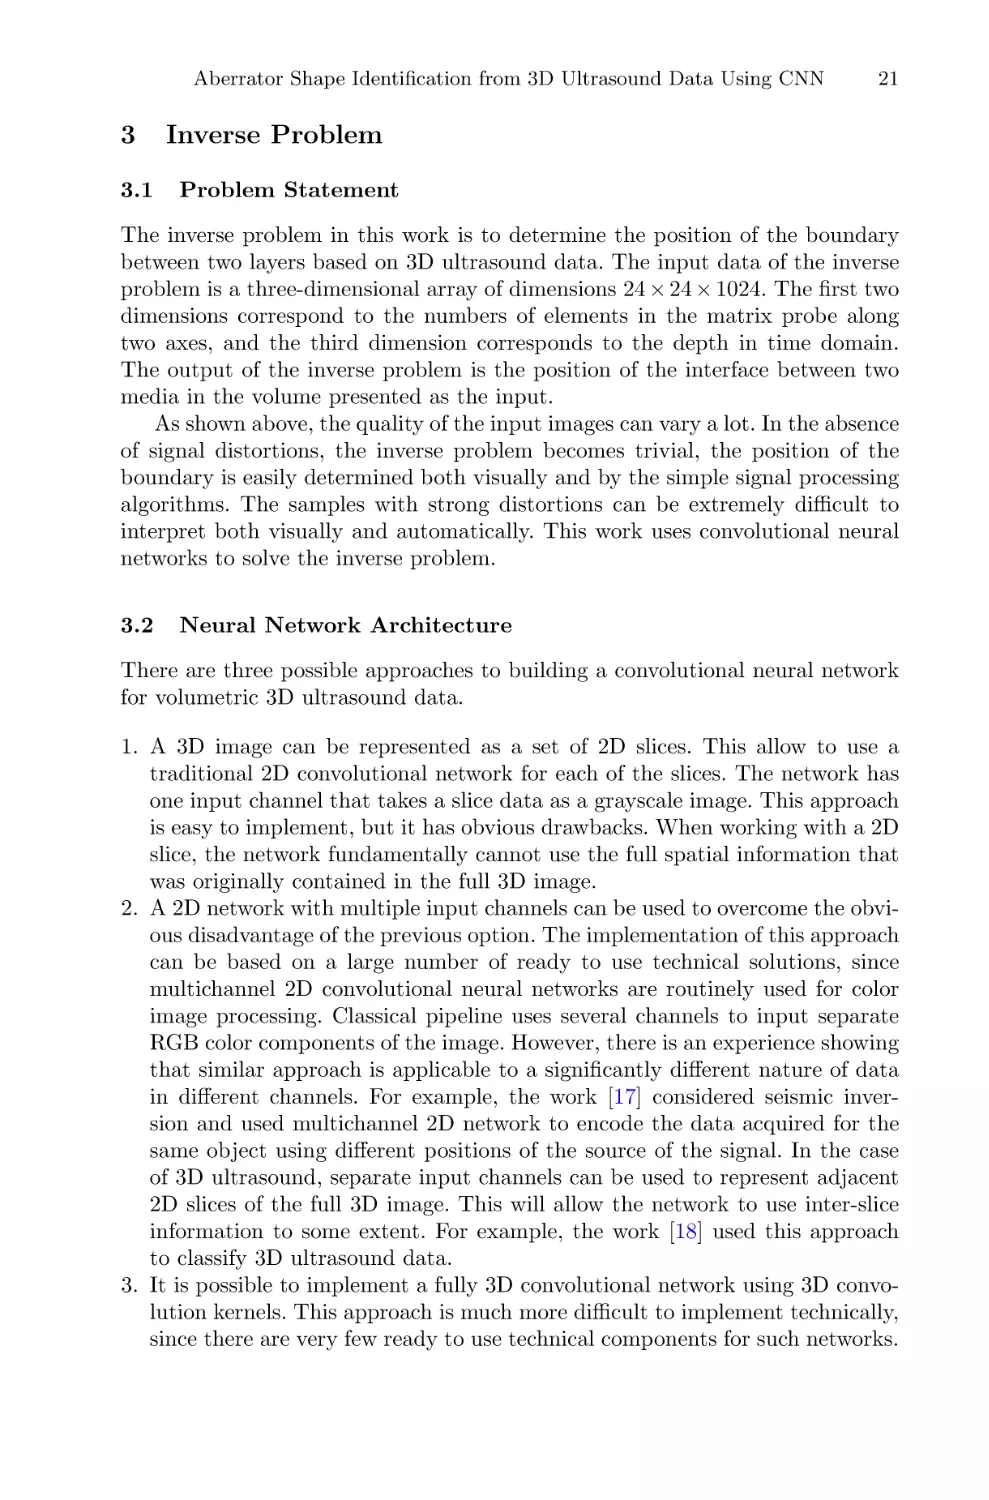 3 Inverse Problem
3.1 Problem Statement
3.2 Neural Network Architecture